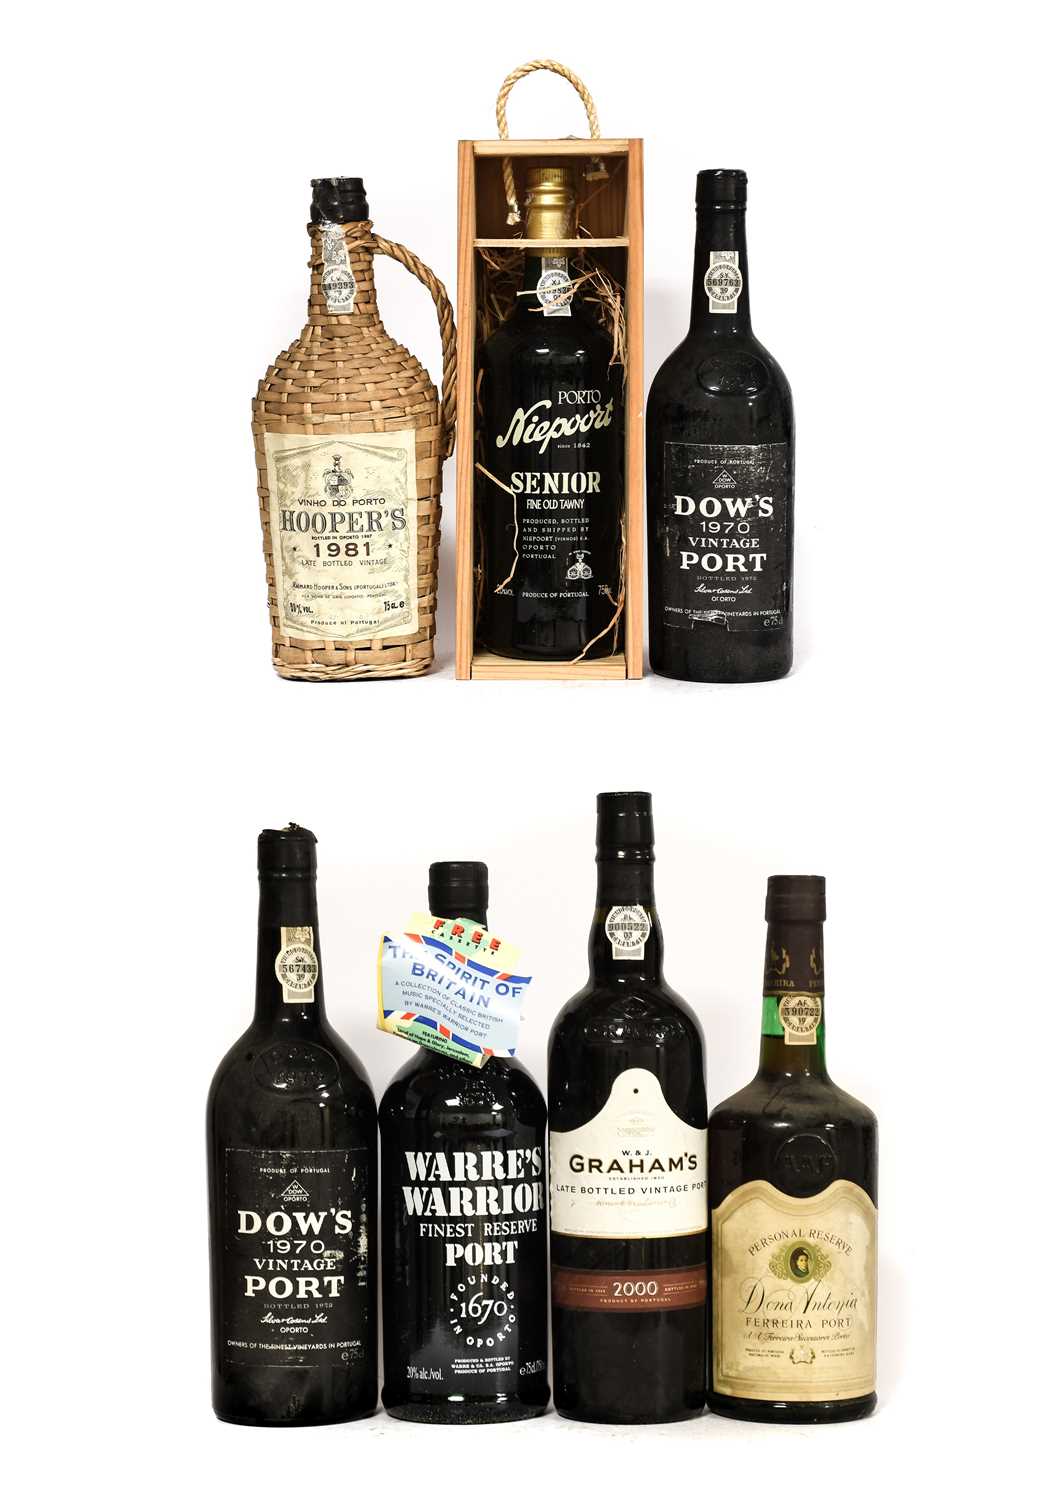 Dow's 1970 Vintage Port (two bottles), Warre's Warrior Finest Port (one bottle), Hooper's 1981